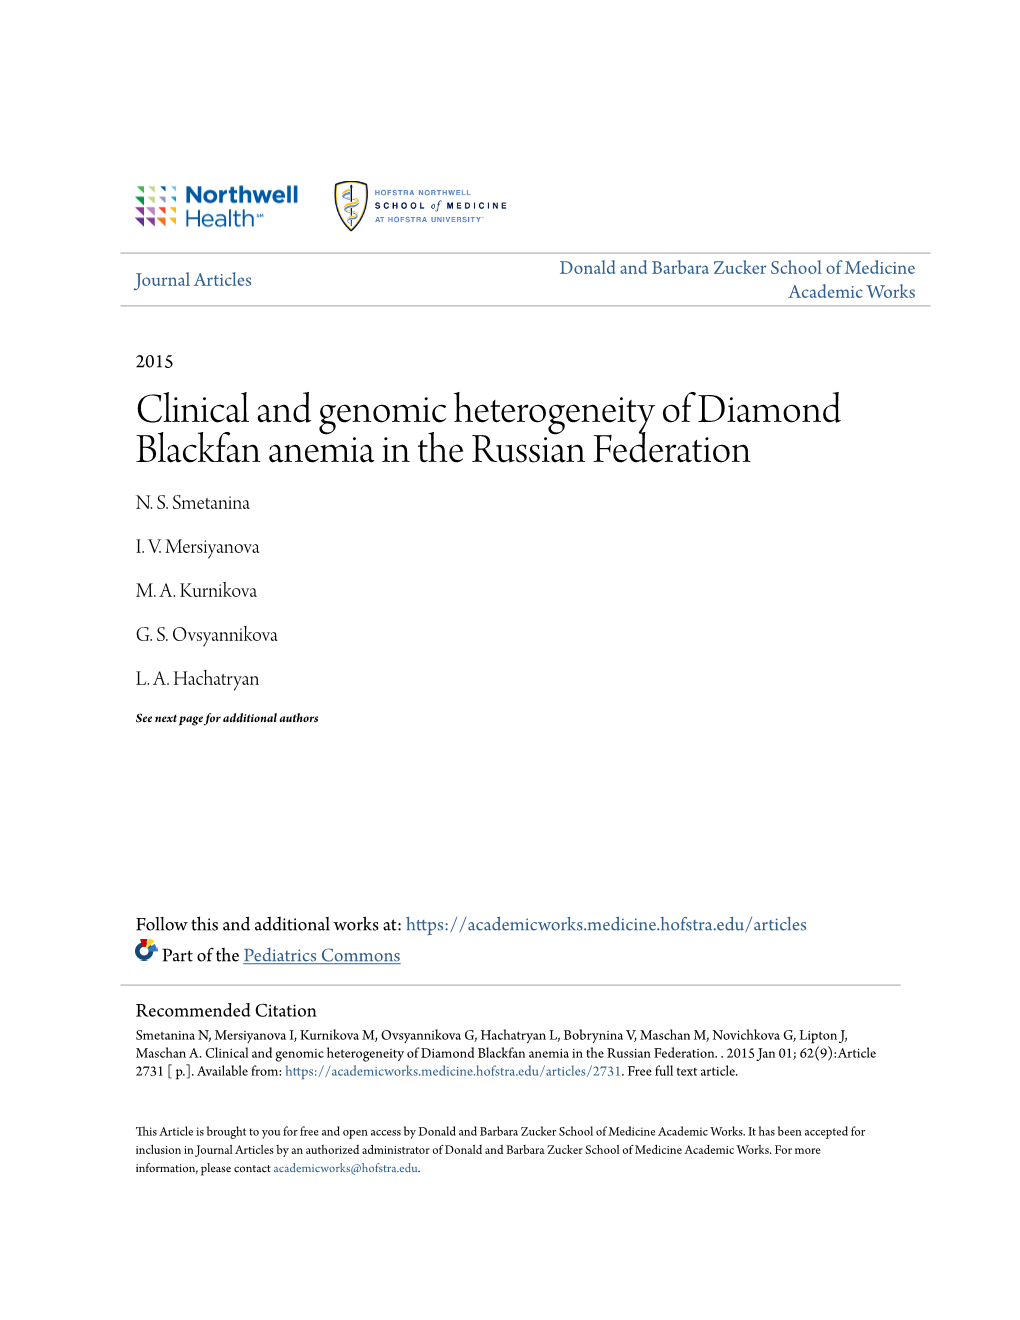 Clinical and Genomic Heterogeneity of Diamond Blackfan Anemia in the Russian Federation N